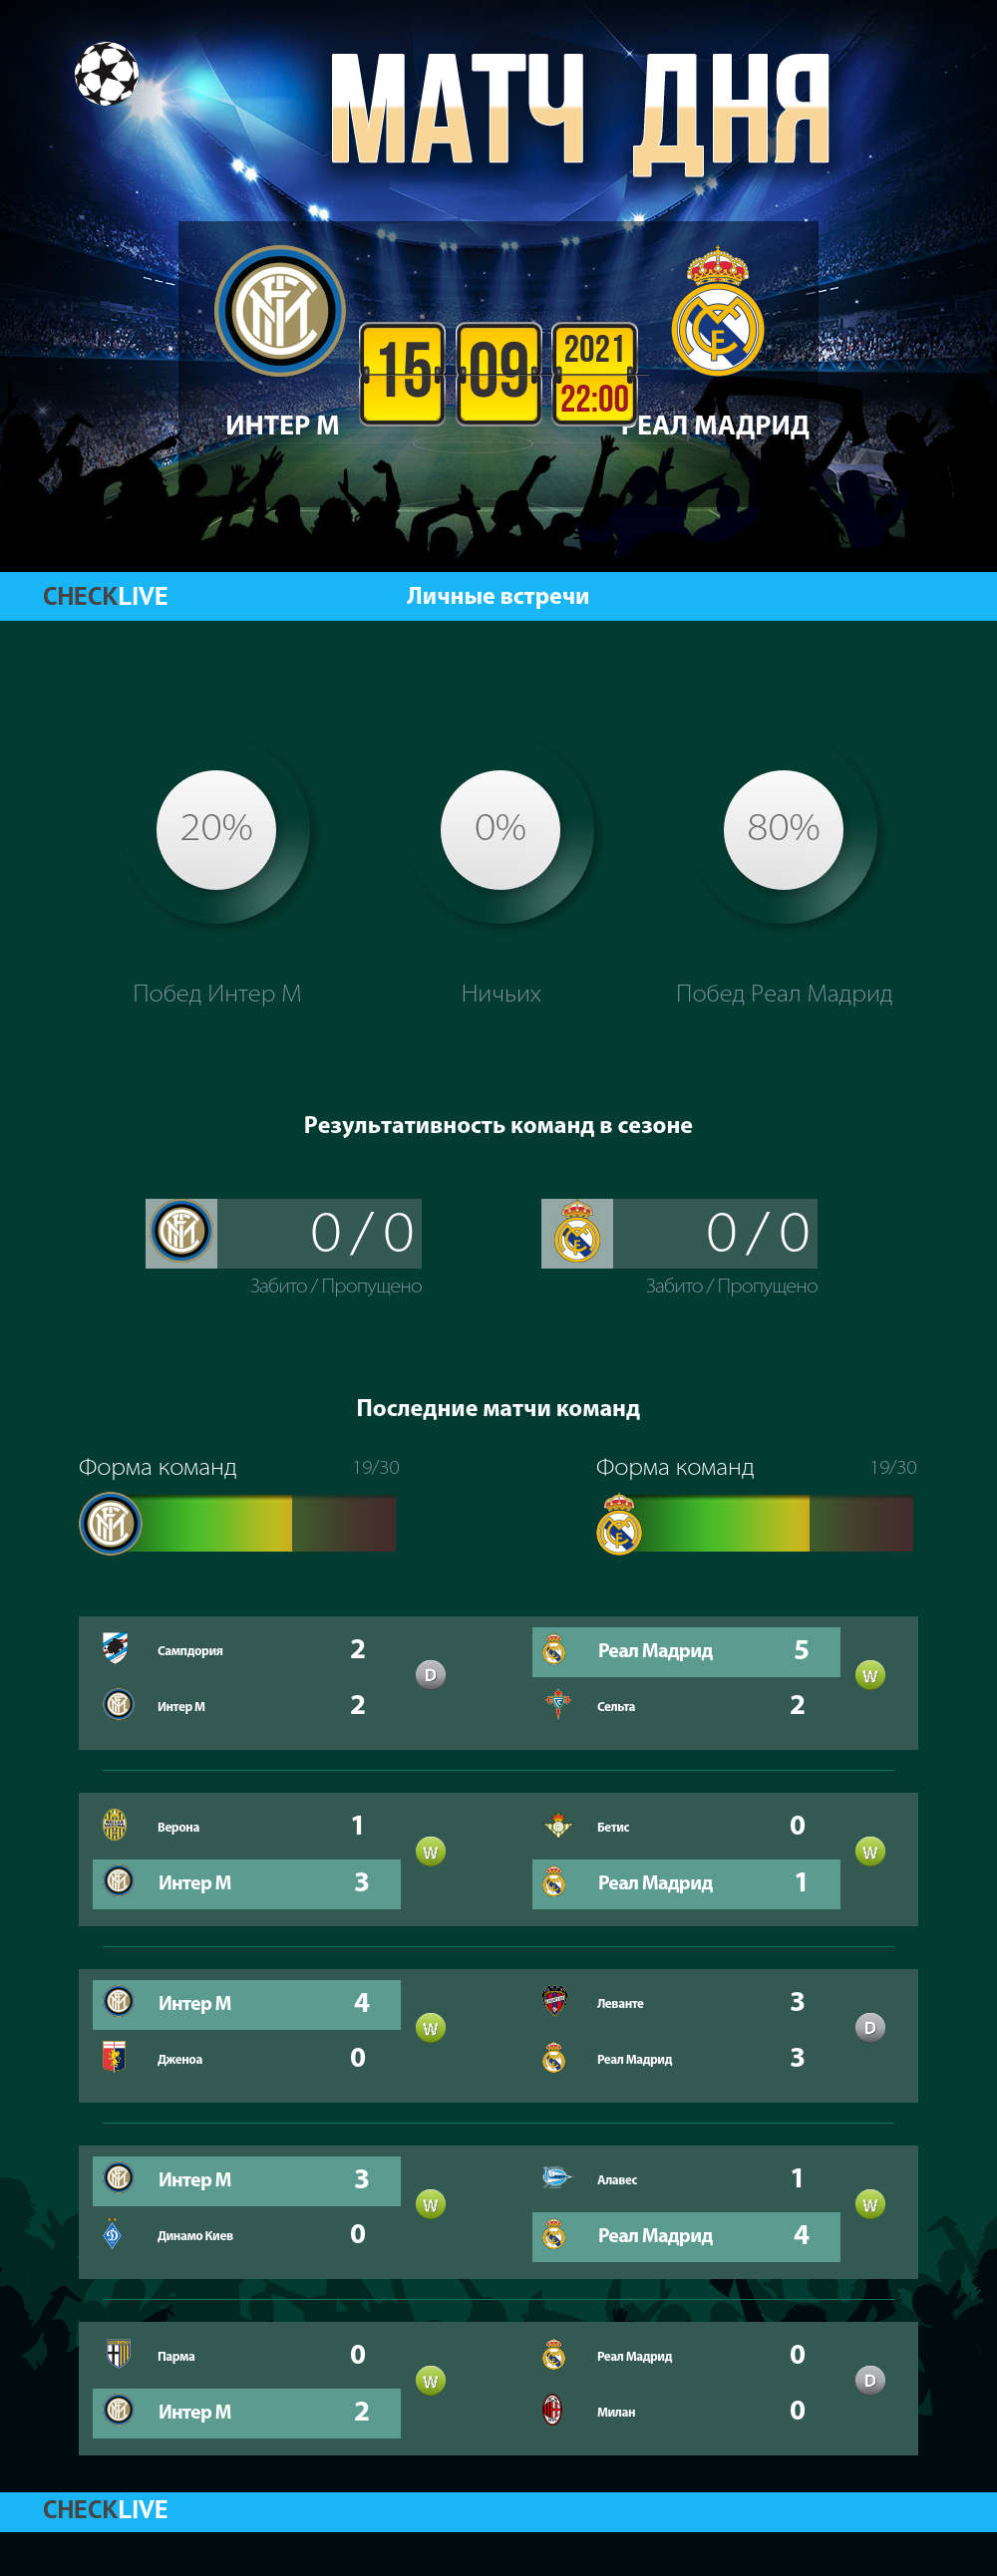 Инфографика Интер М и Реал Мадрид матч дня 15.09.2021